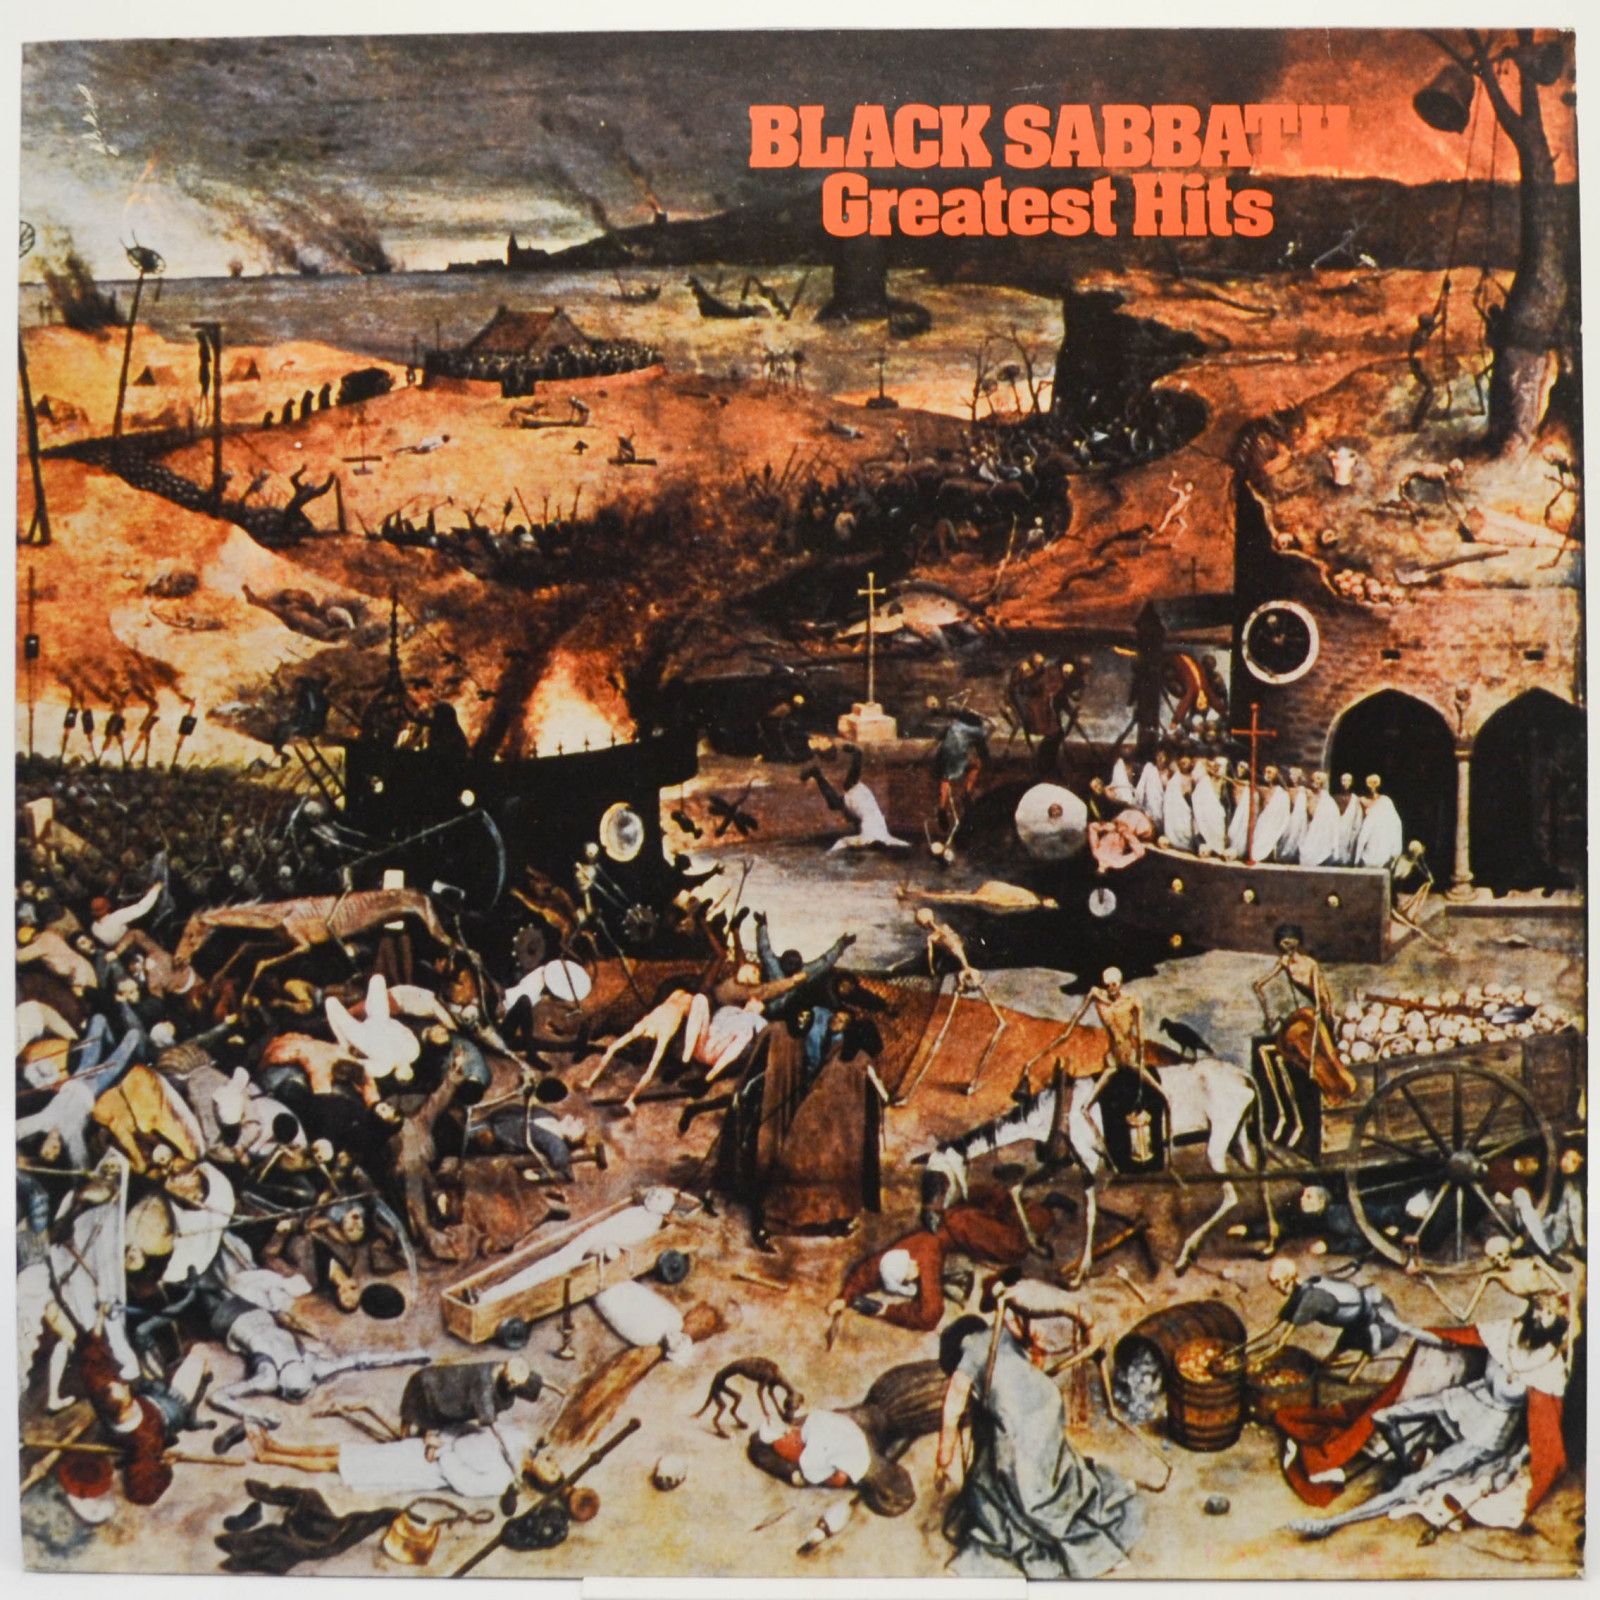 Black Sabbath — Greatest Hits, 1977